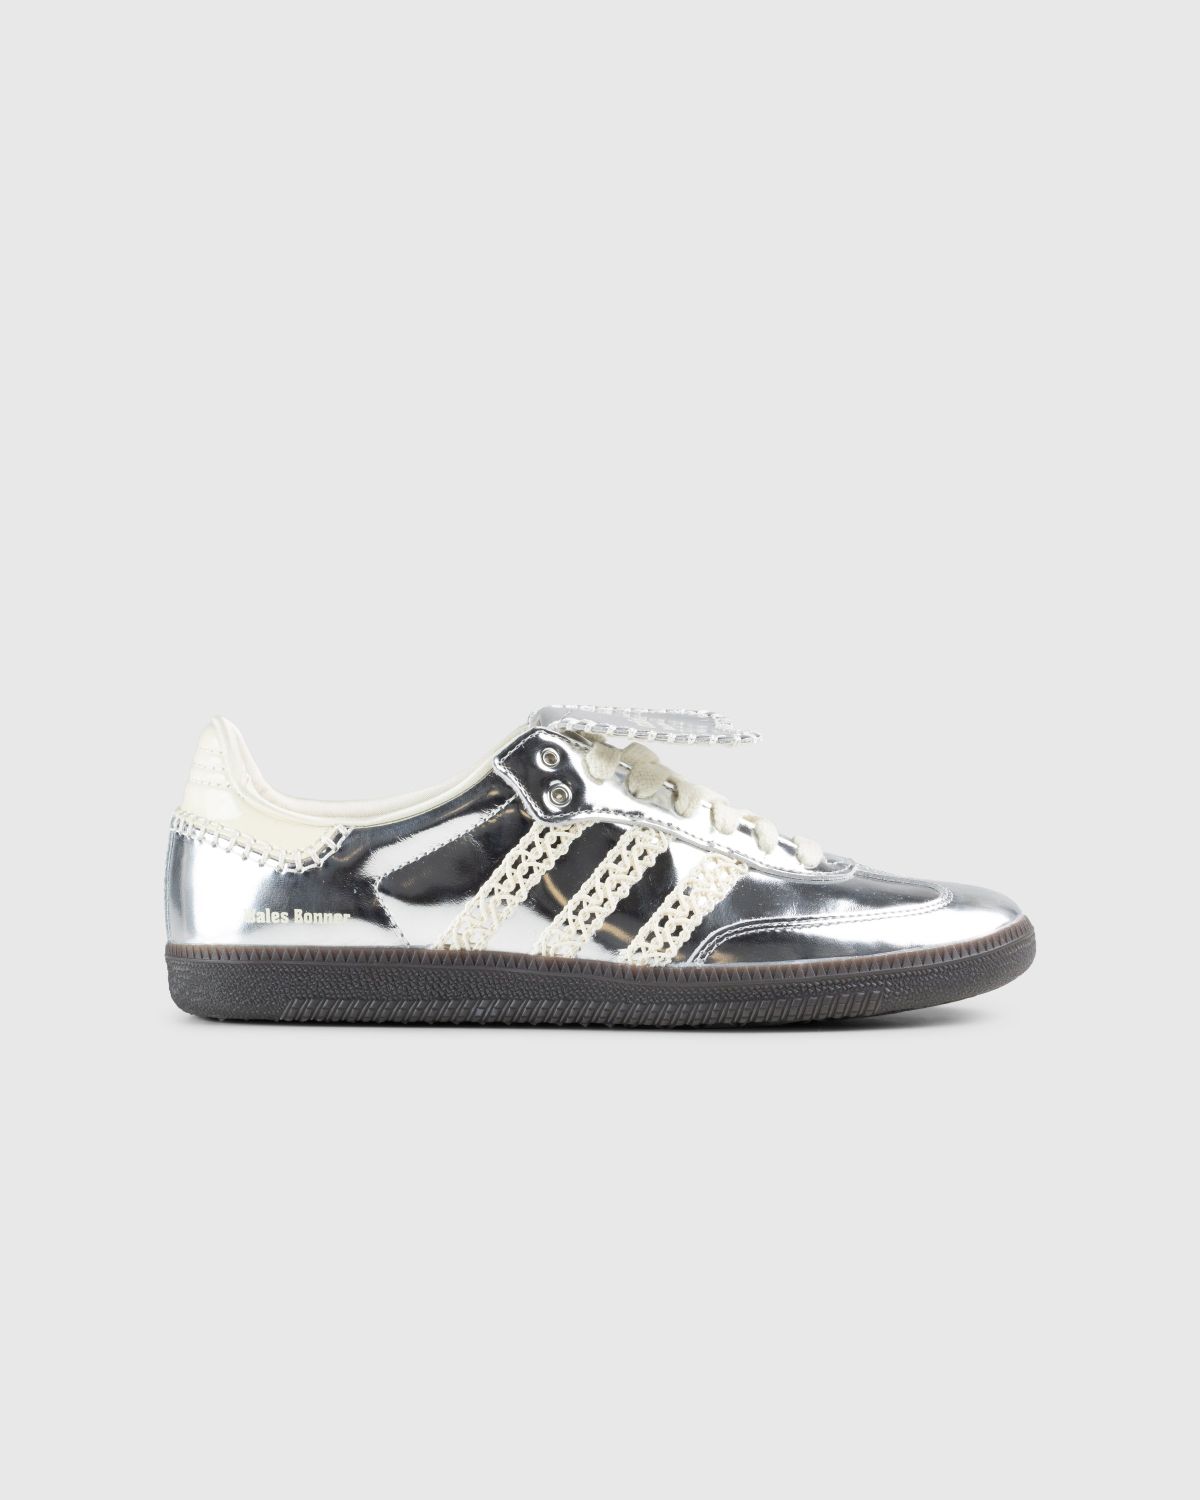 metallic silver sneakers